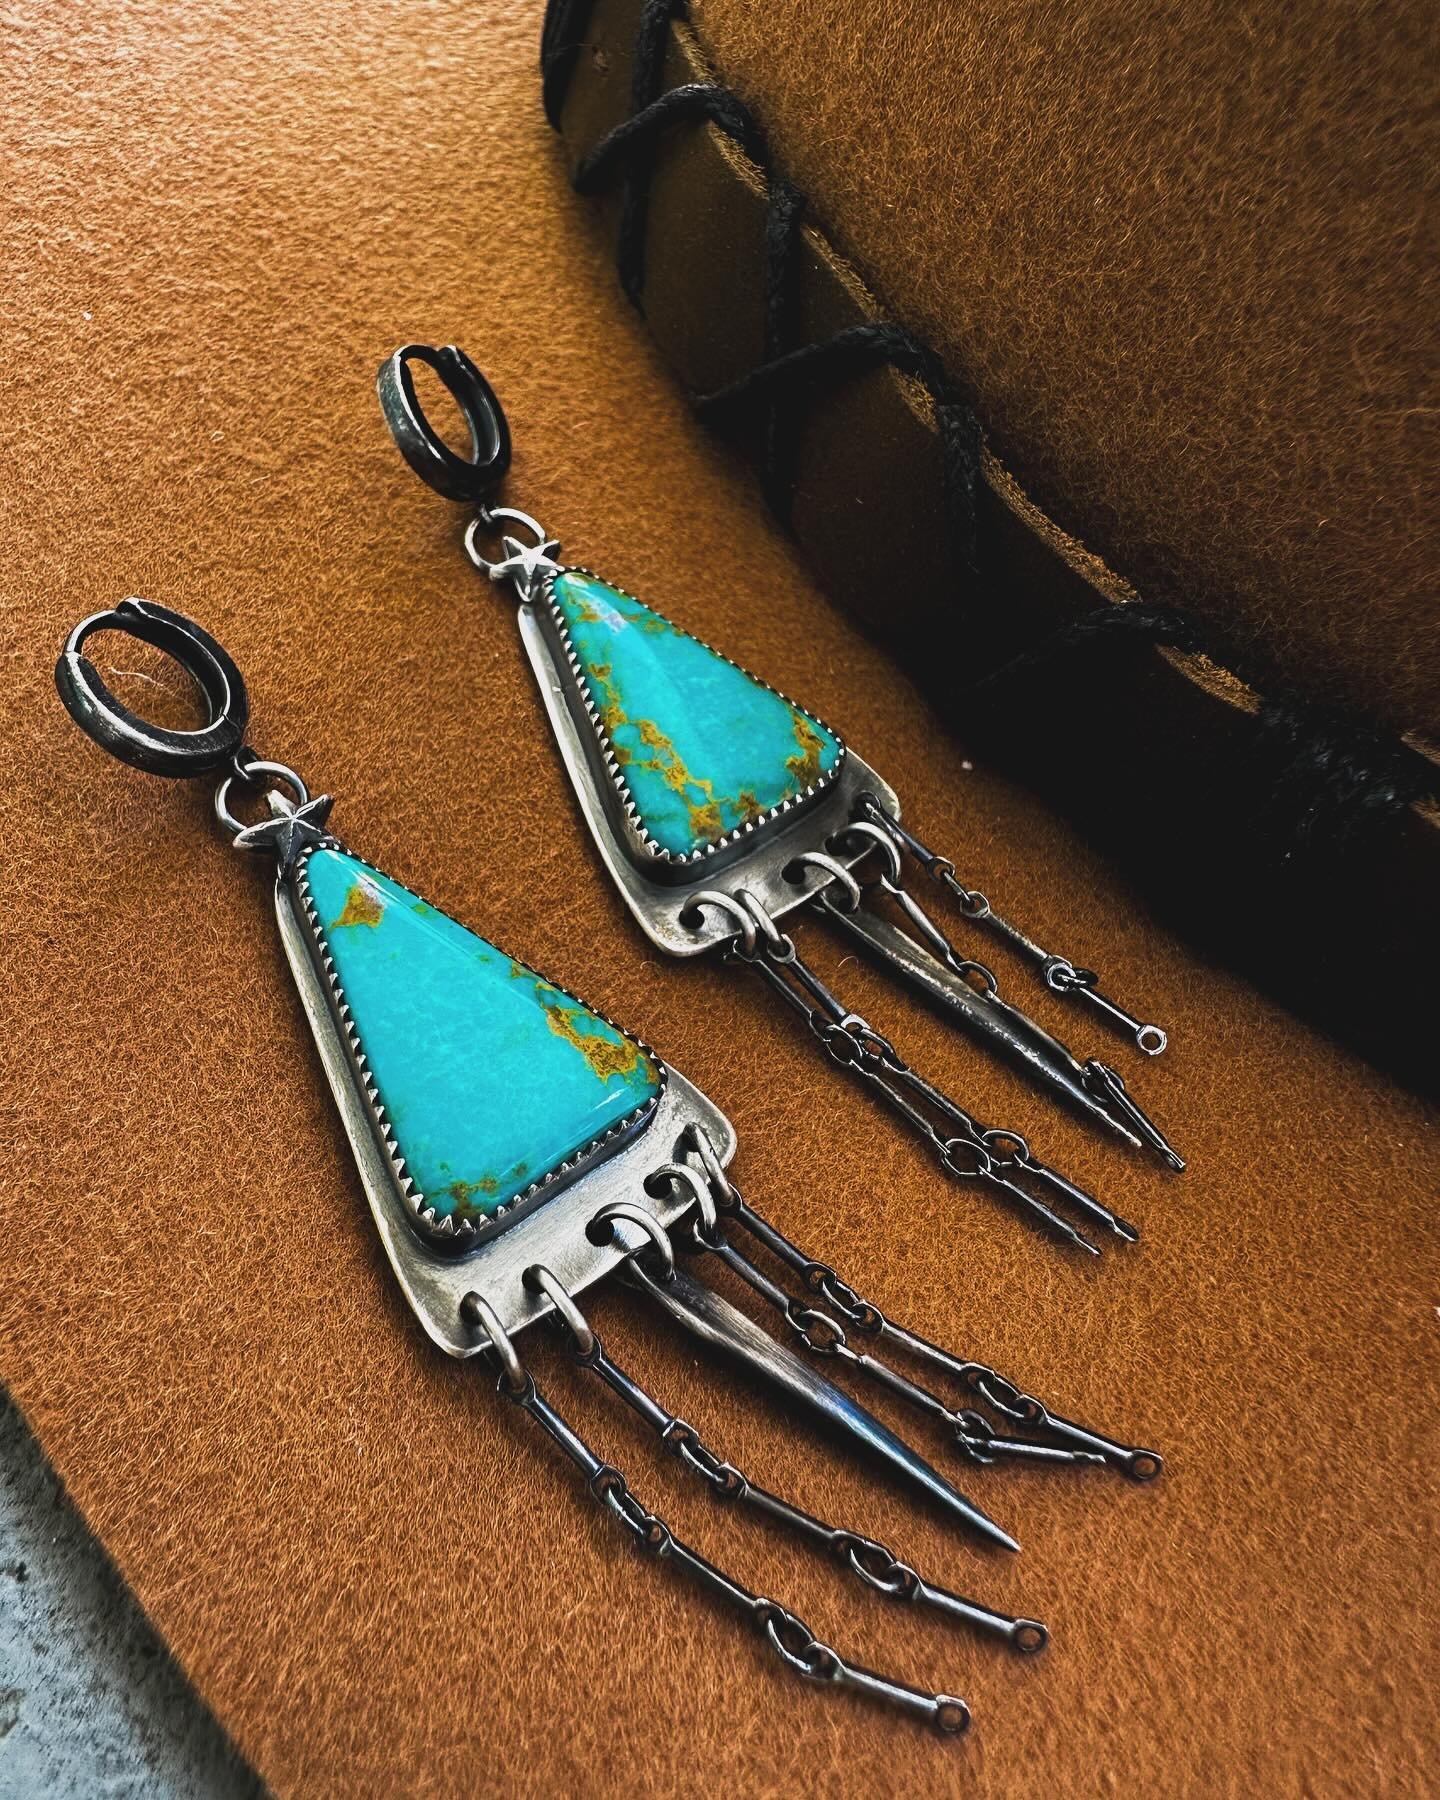 Loving these Kingman Turquoise earrings. NFS while I decide if I&rsquo;m going to keep them for myself 😅
.
.
.
.
#turquoiseearrings #riojeweler #metalsmith #fringeearrings #bohojewelry #bohofashion #bohostyle #southwestjewelry #handmadewithlove #kin